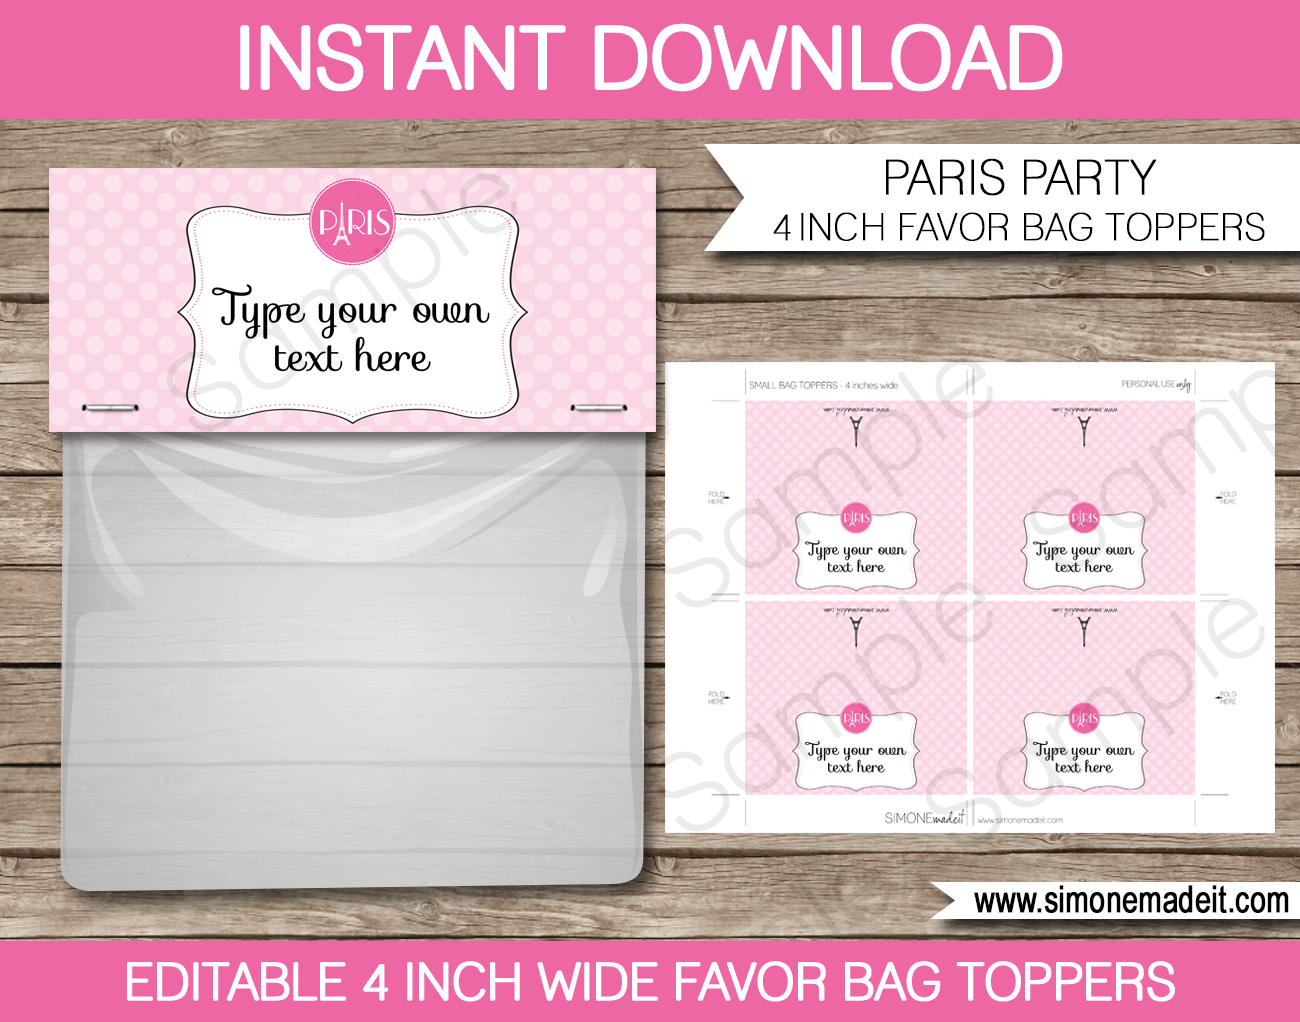 Paris Party Favor Bag Toppers | Birthday Party | Editable DIY Template | $3.00 INSTANT DOWNLOAD via SIMONEmadeit.com